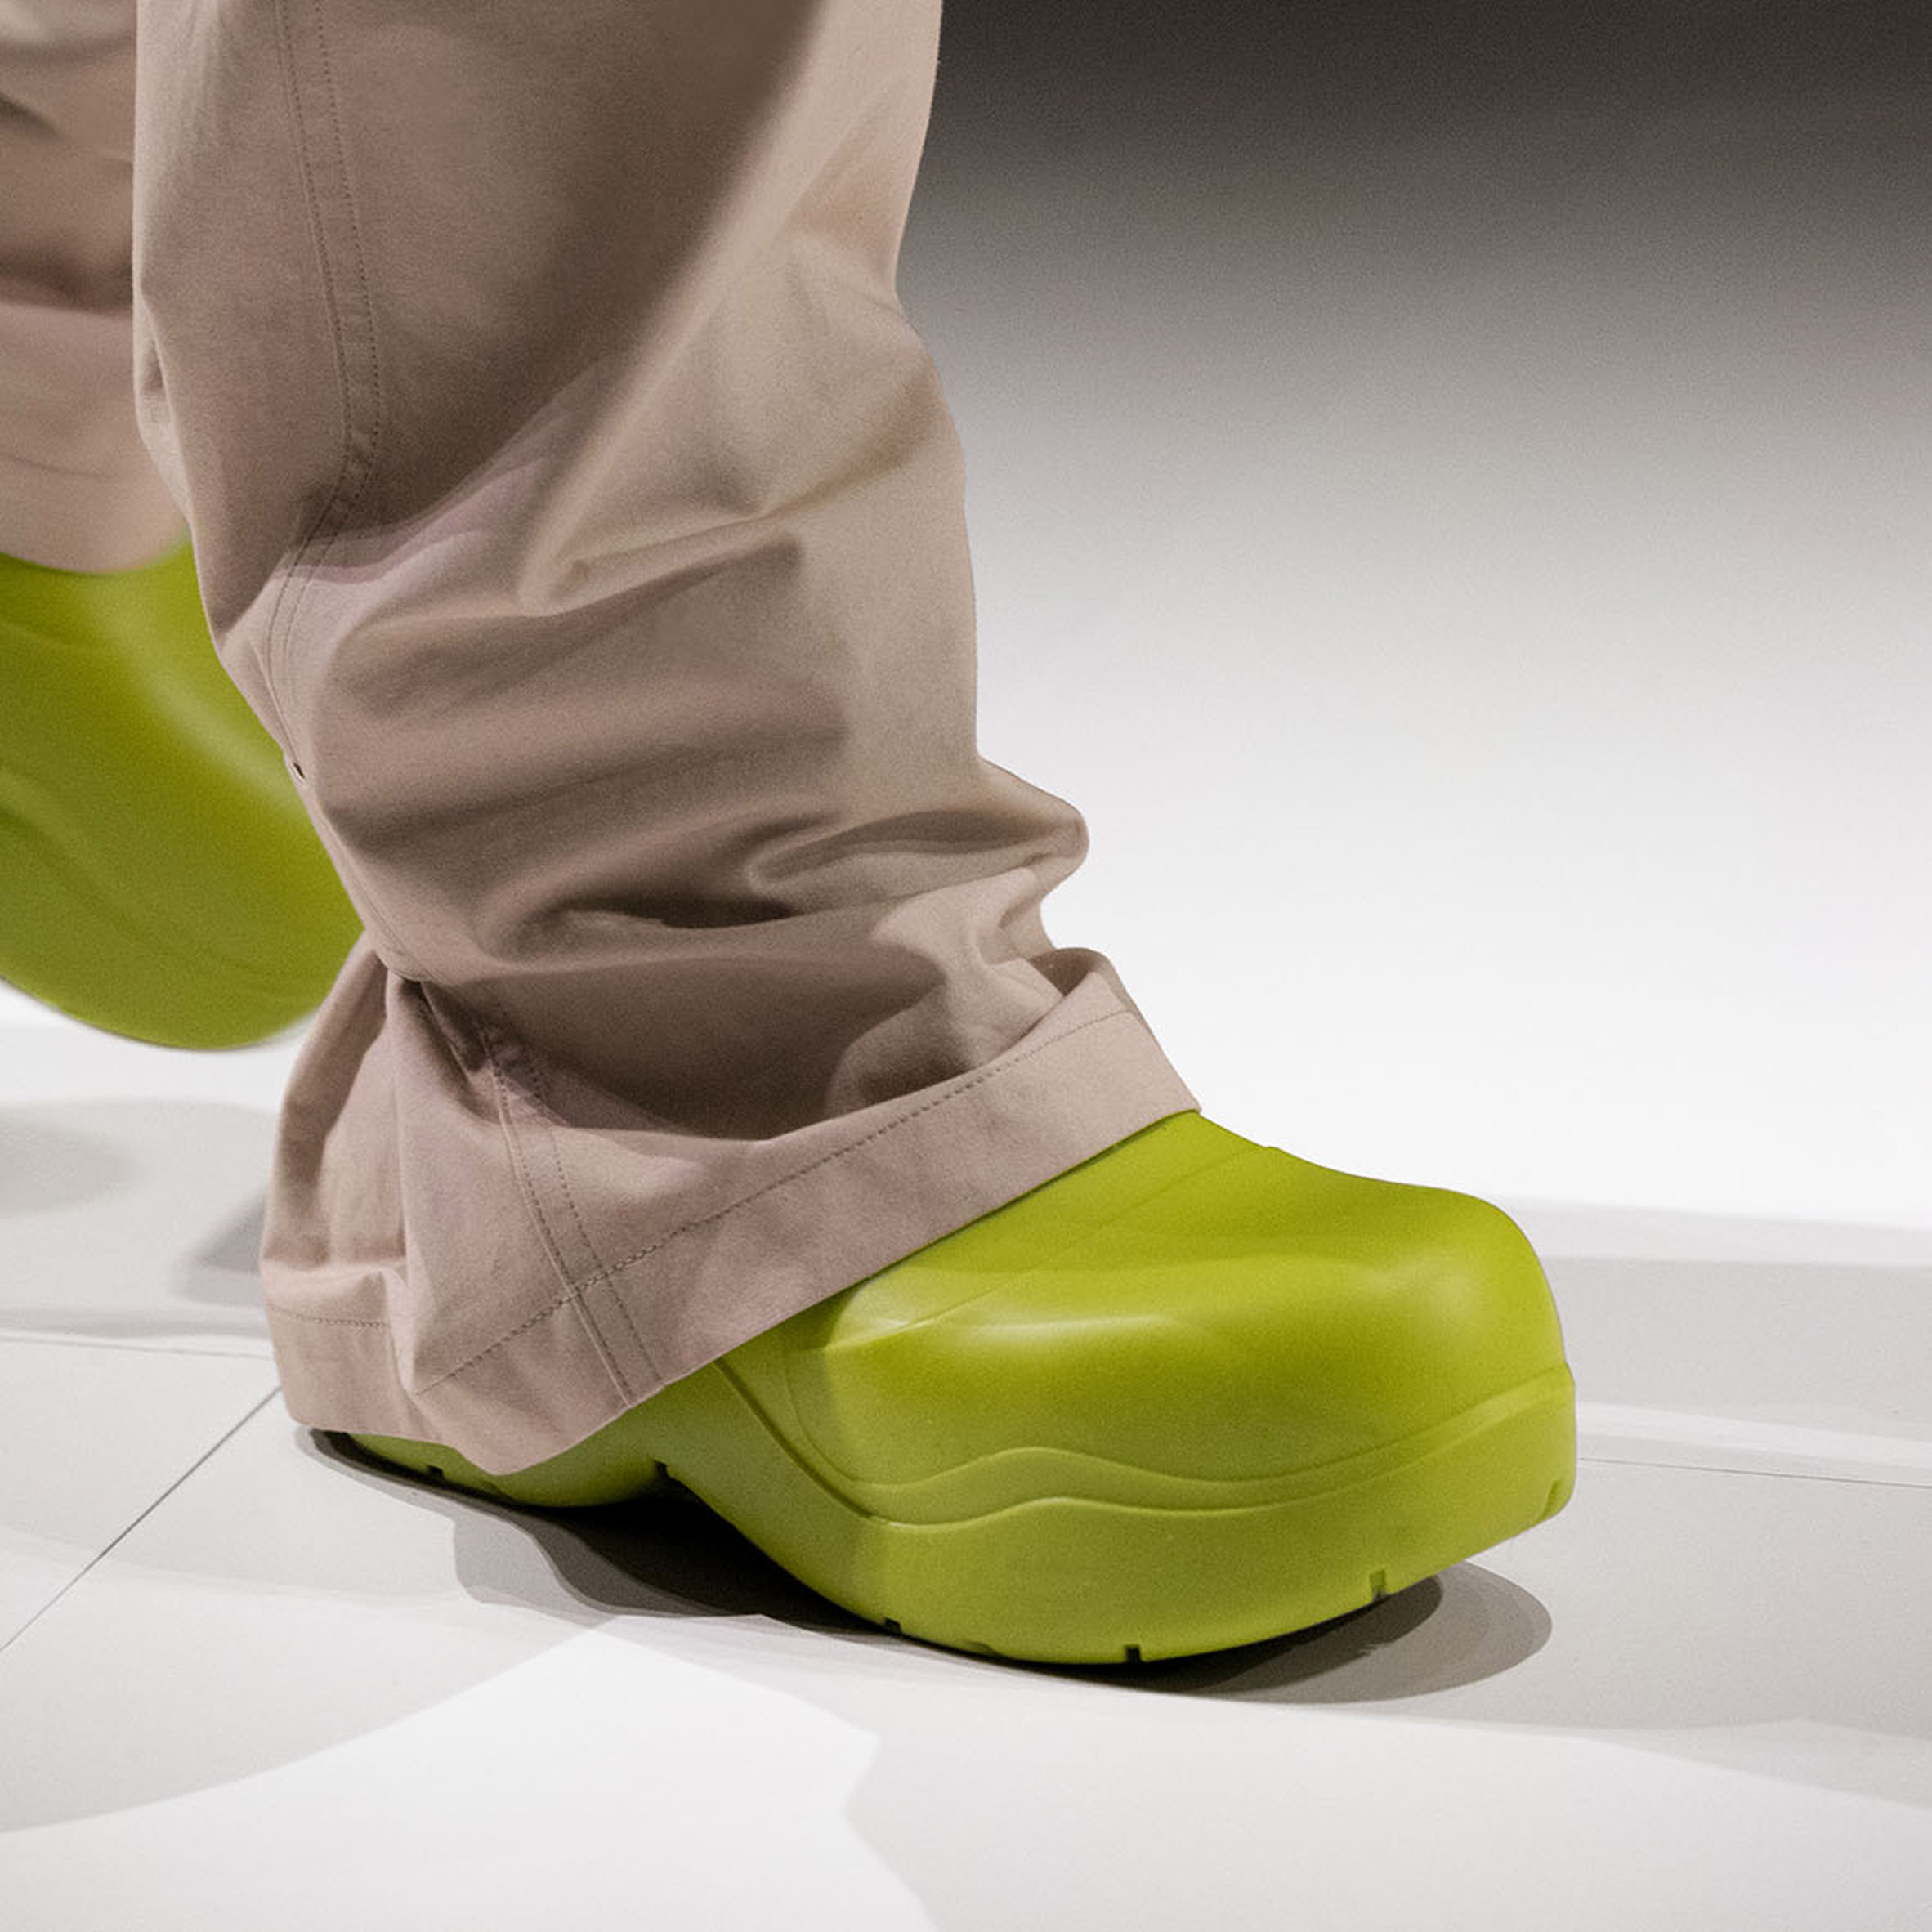 Bottega Veneta debuts 100 per cent biodegradable boot